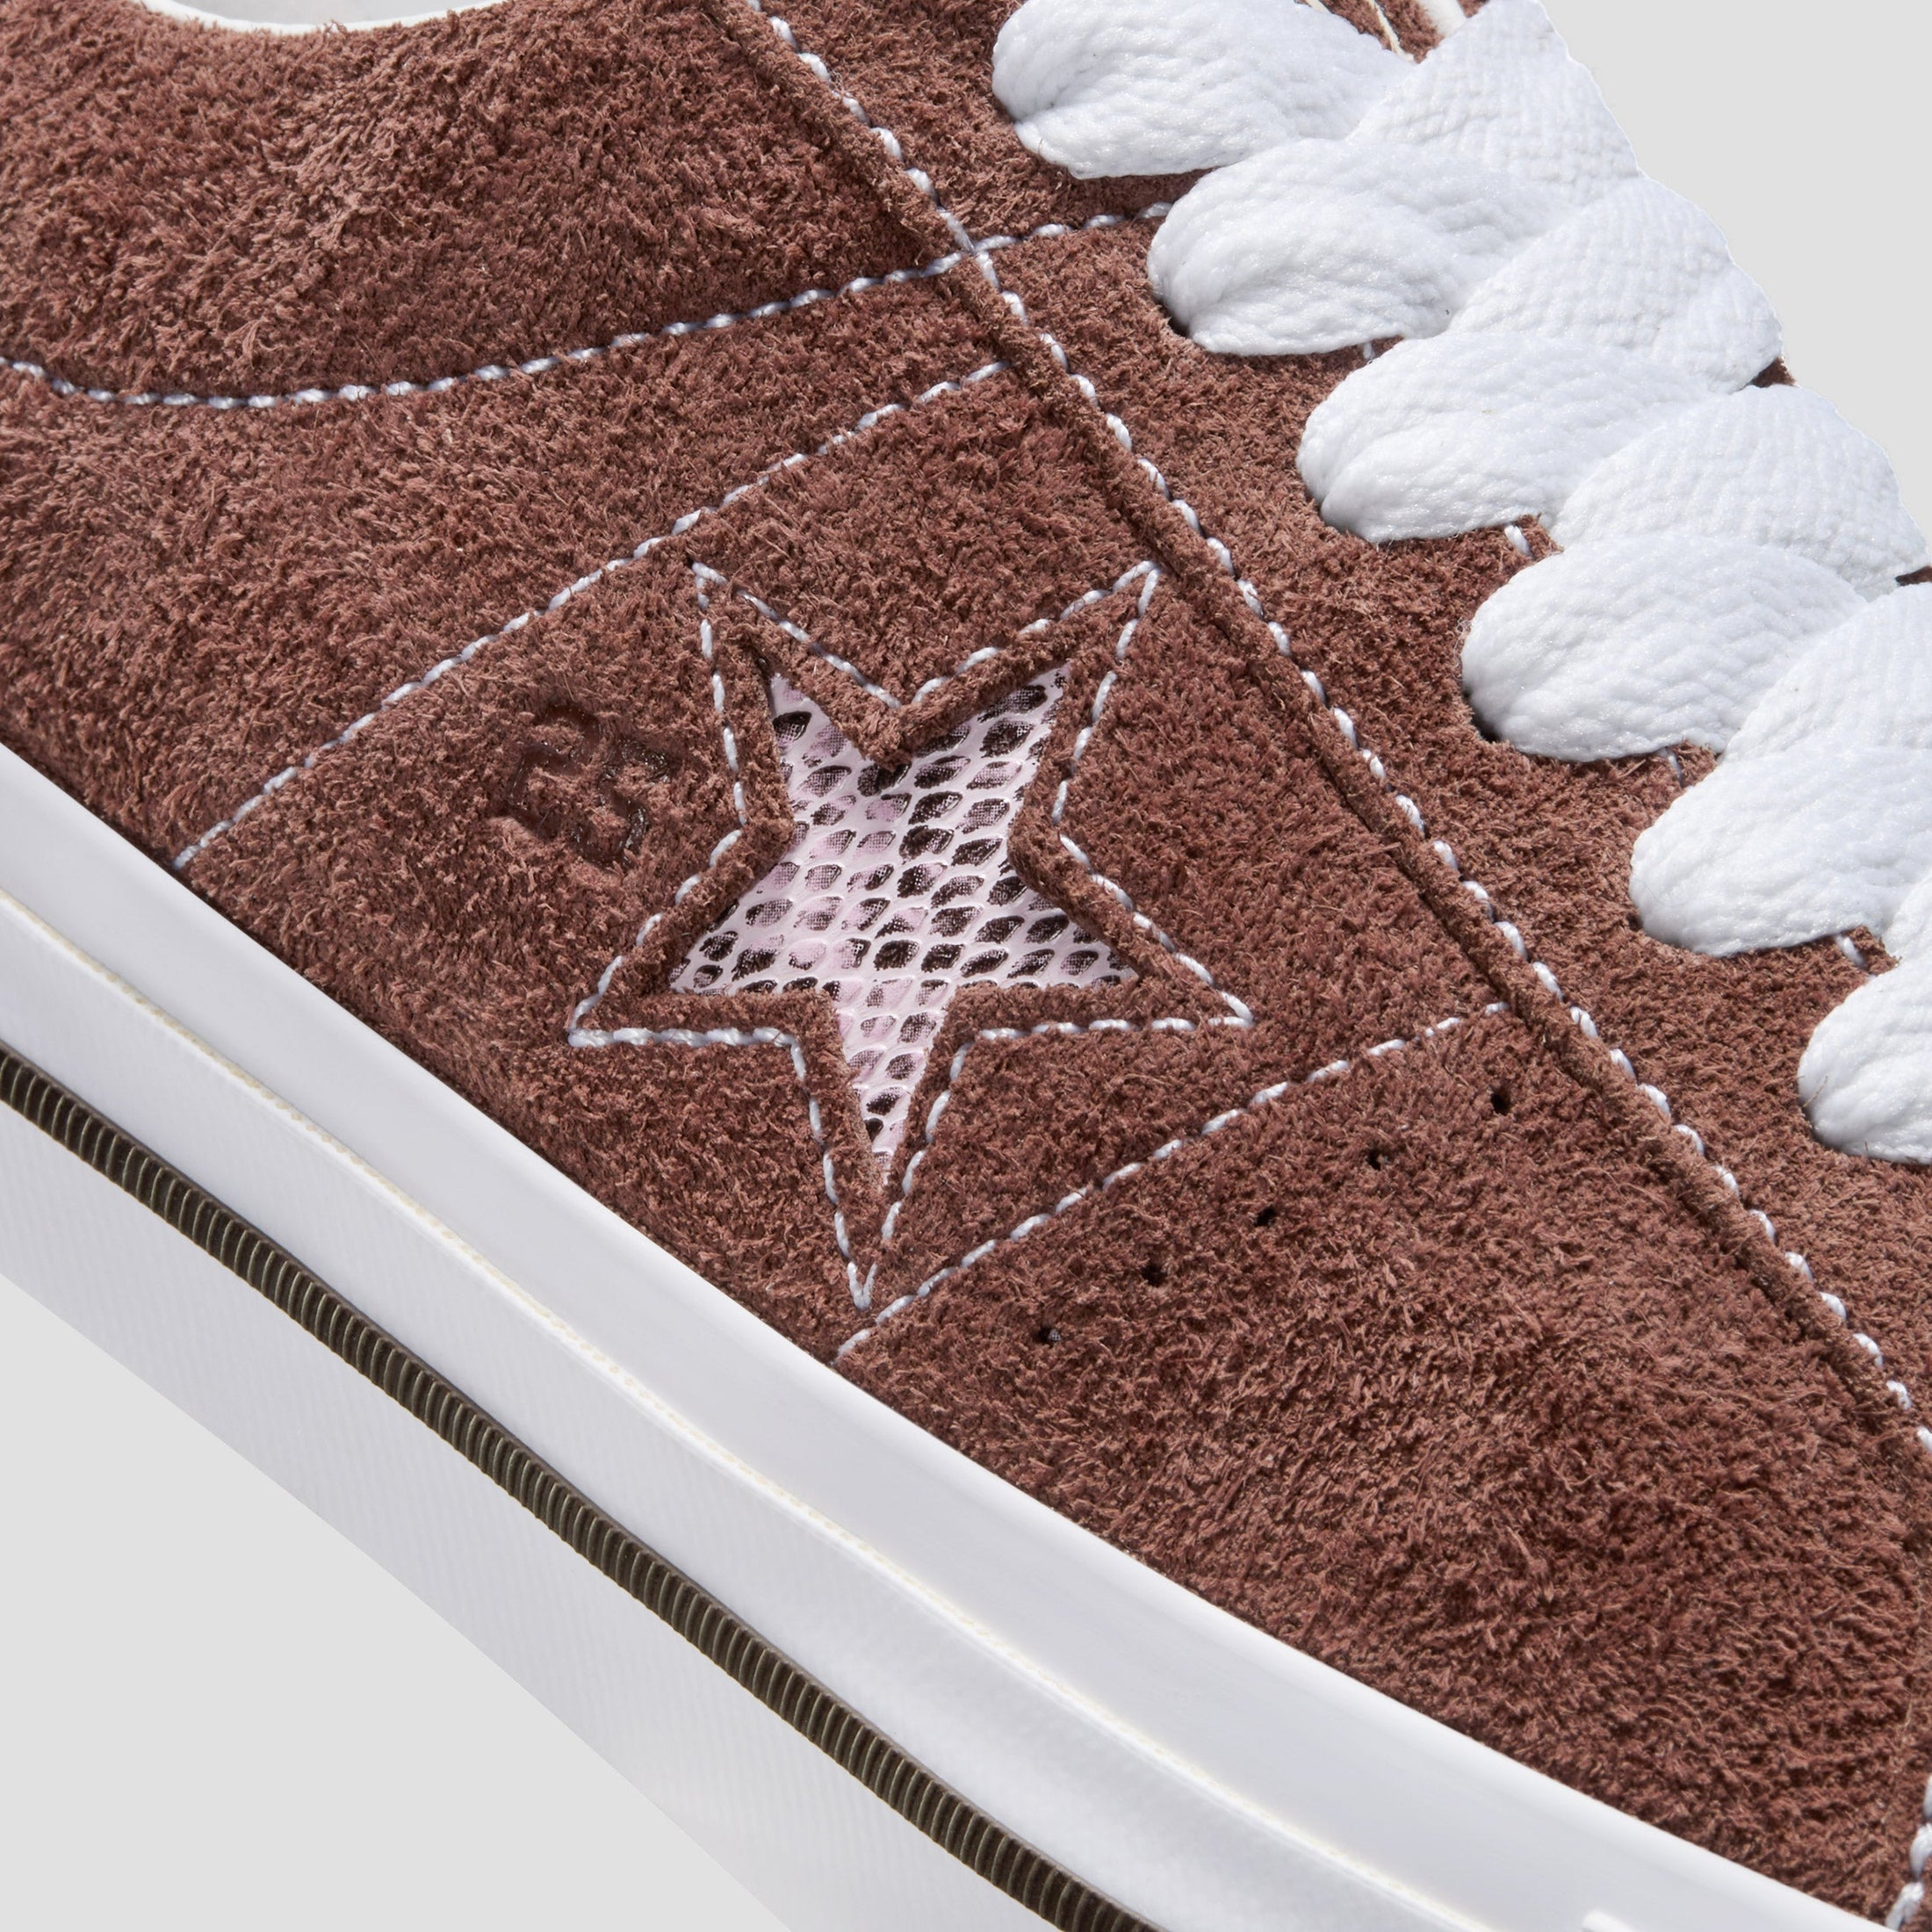 Converse Cons x Quartersnacks One Star Pro Ox Skate Shoes Dark Clove / White / Cherry